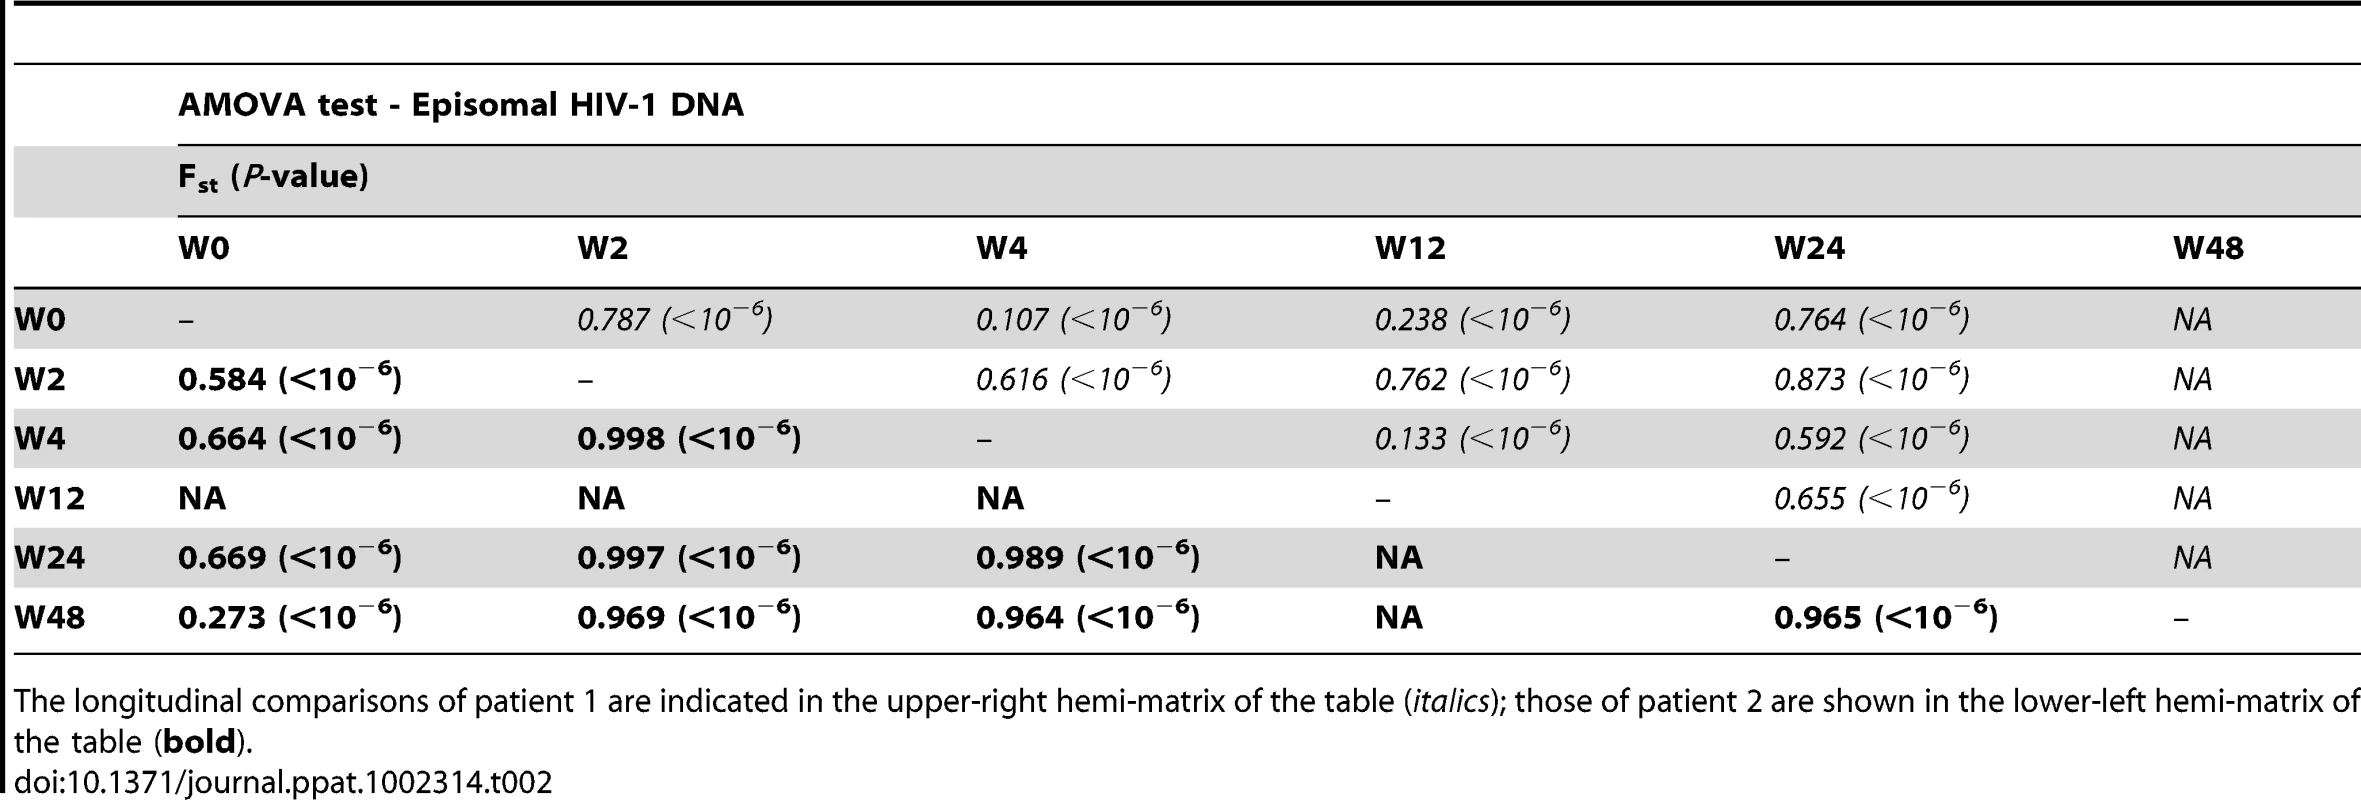 Temporal population structure: AMOVA test for comparison between longitudinal episomal HIV-1 DNA.